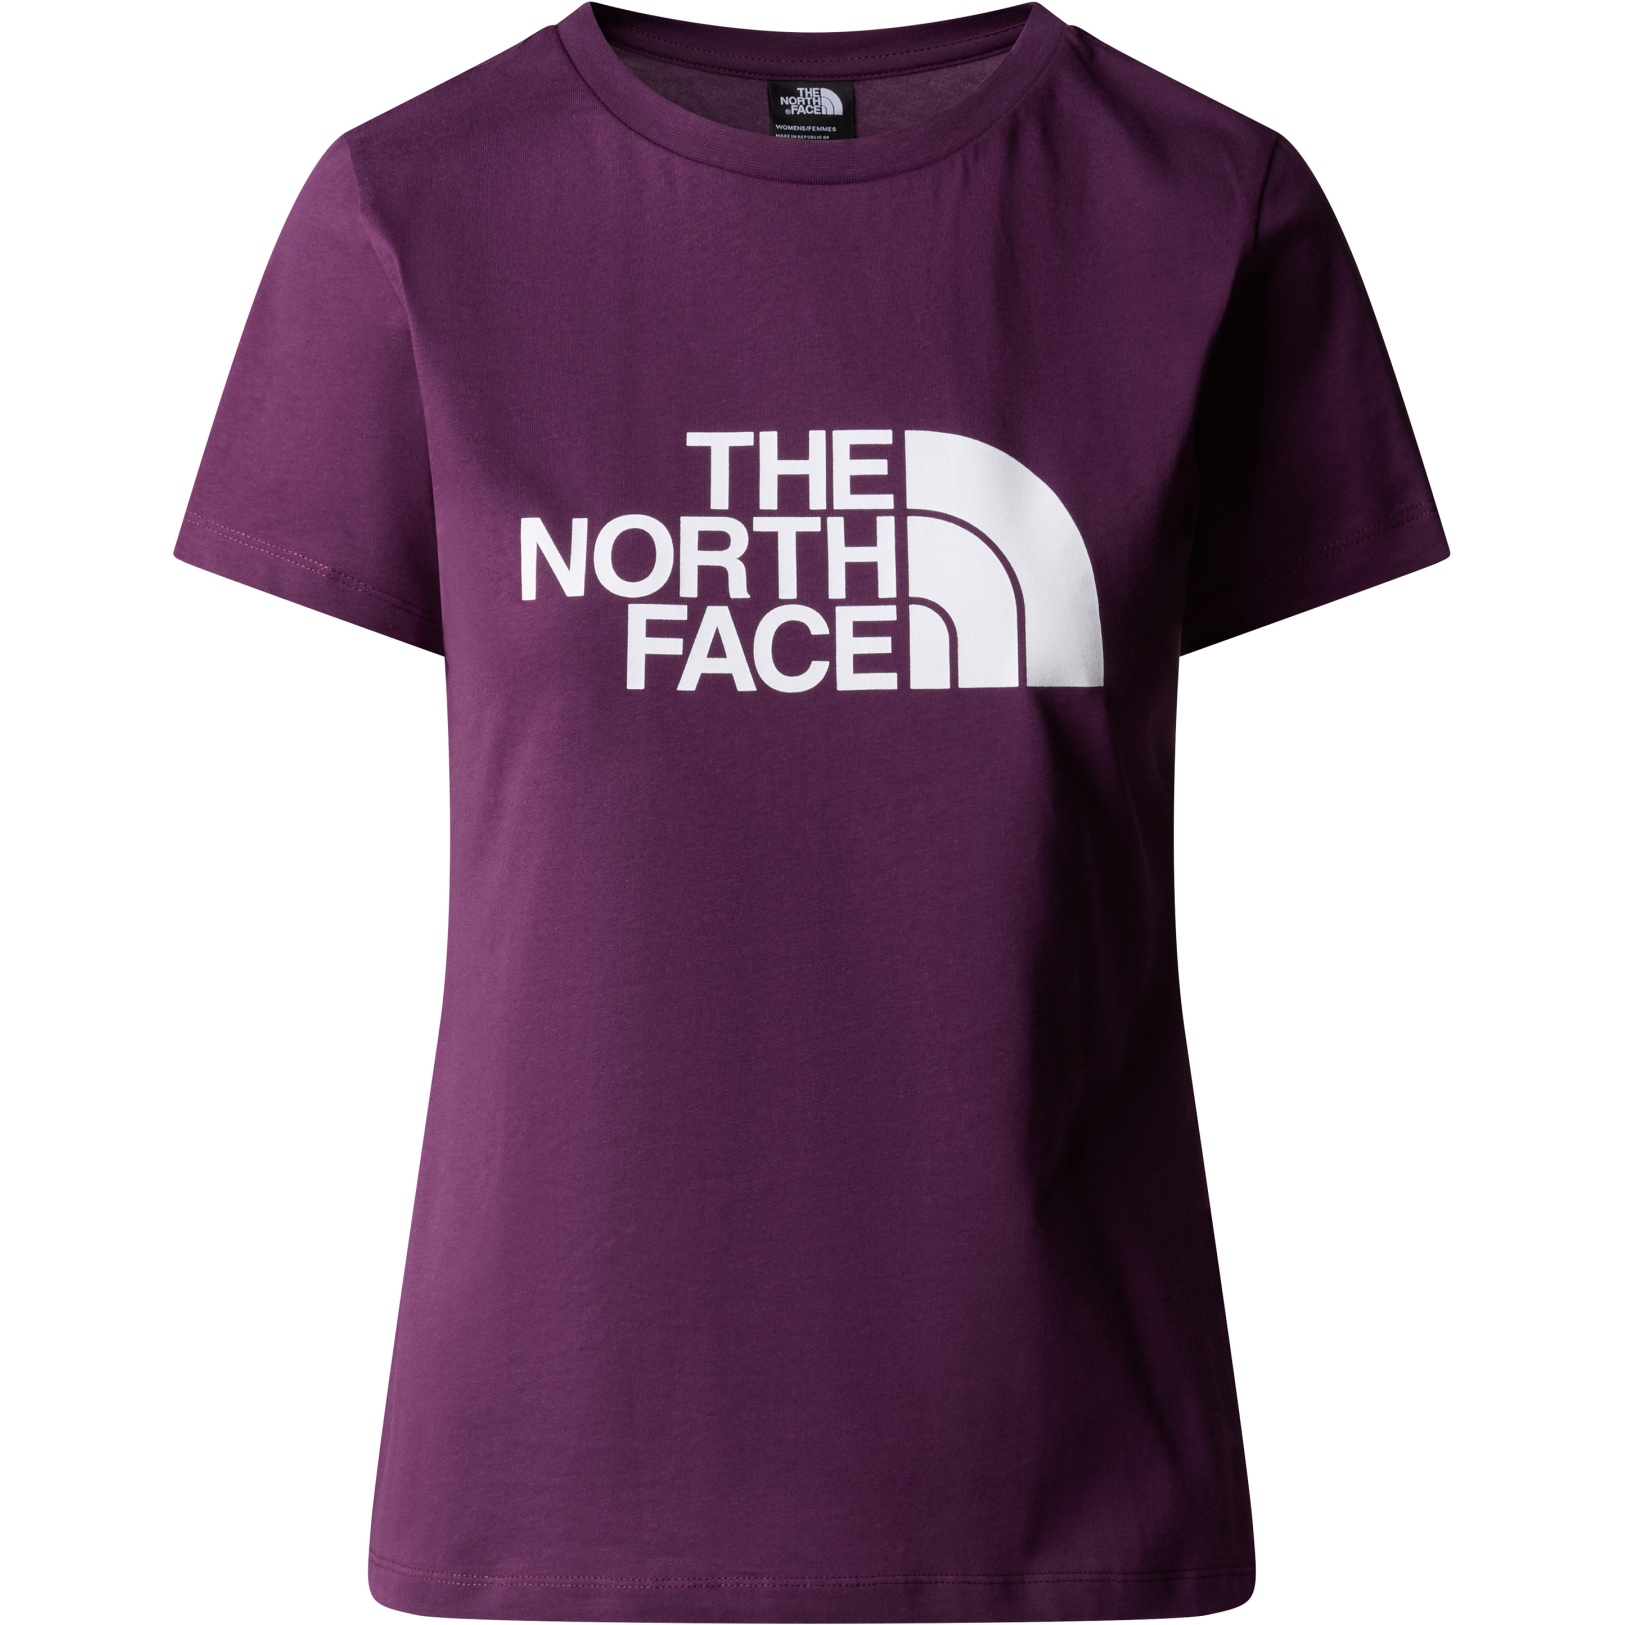 Bild von The North Face Easy T-Shirt Damen - Black Currant Purple